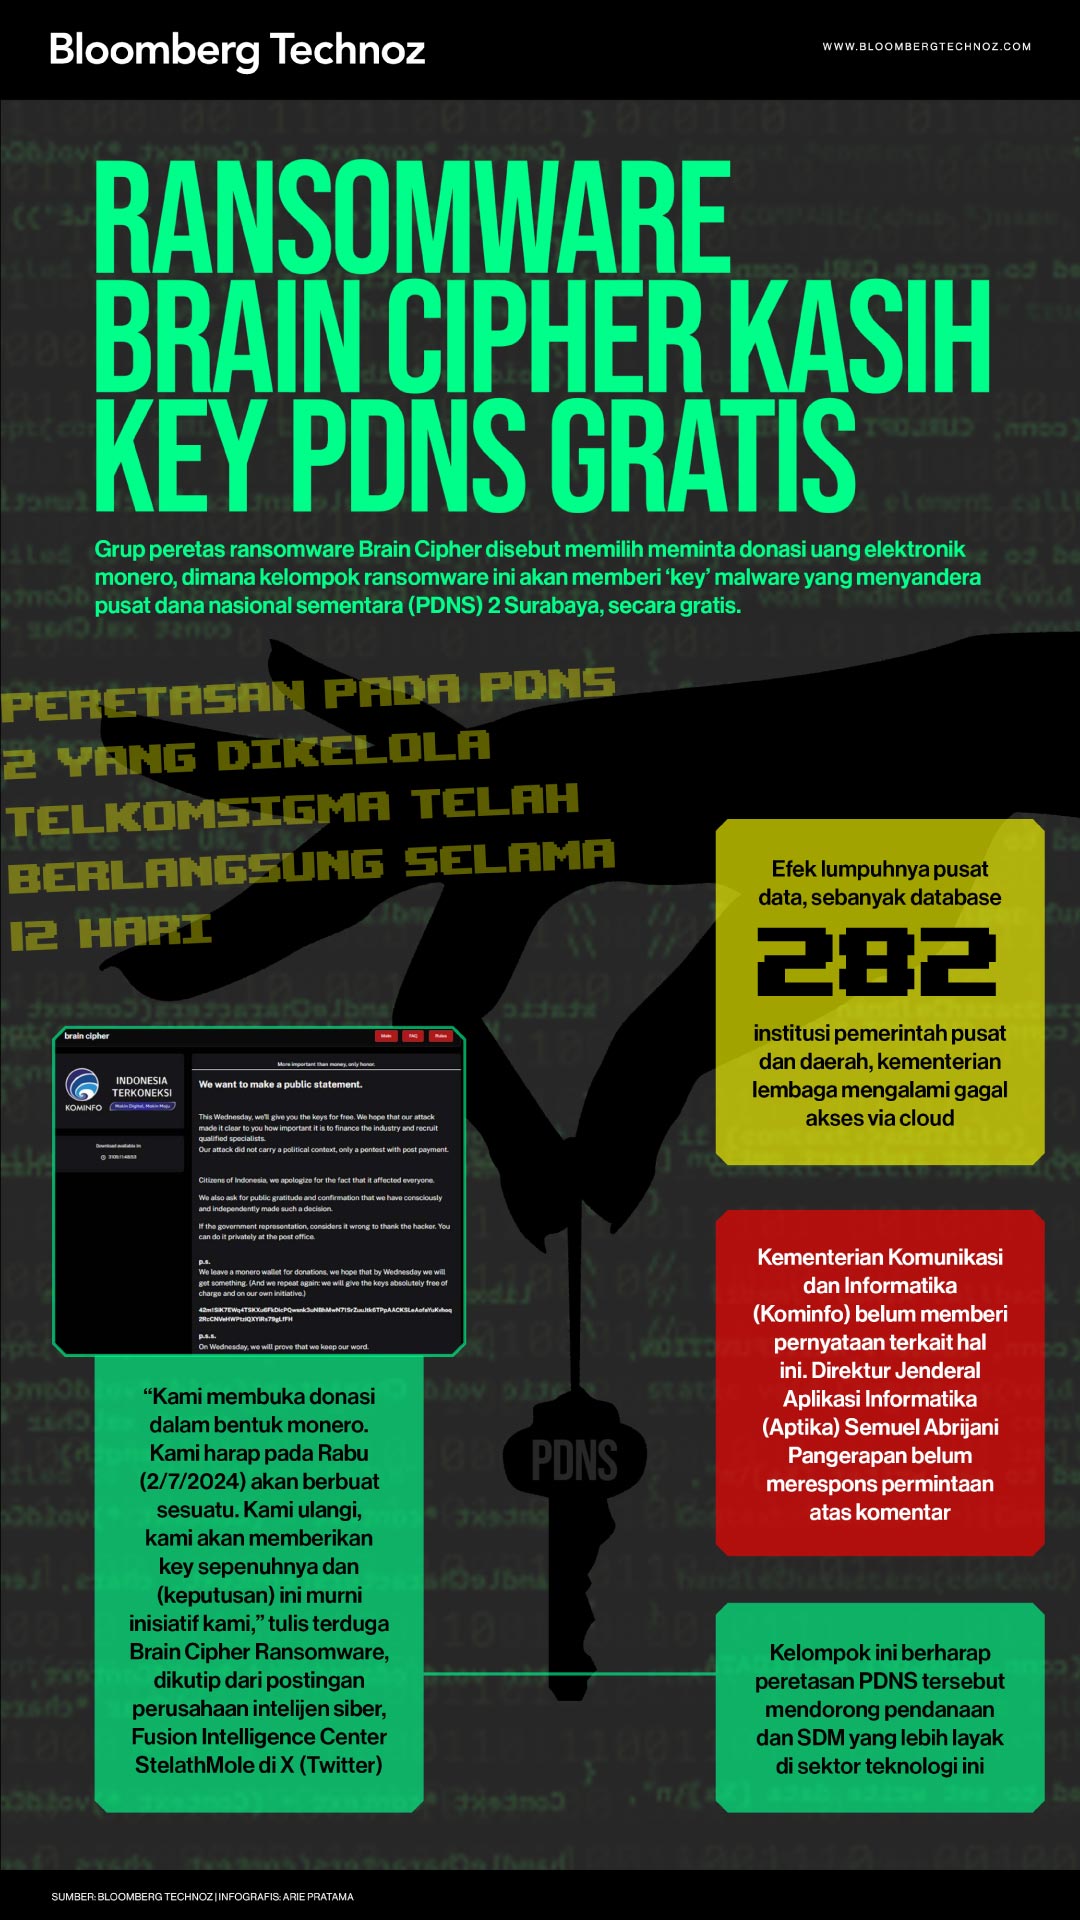 Ransomware Brain Cipher Kasih Key PDNS Gratis (Bloomberg Technoz/Arie Pratama)